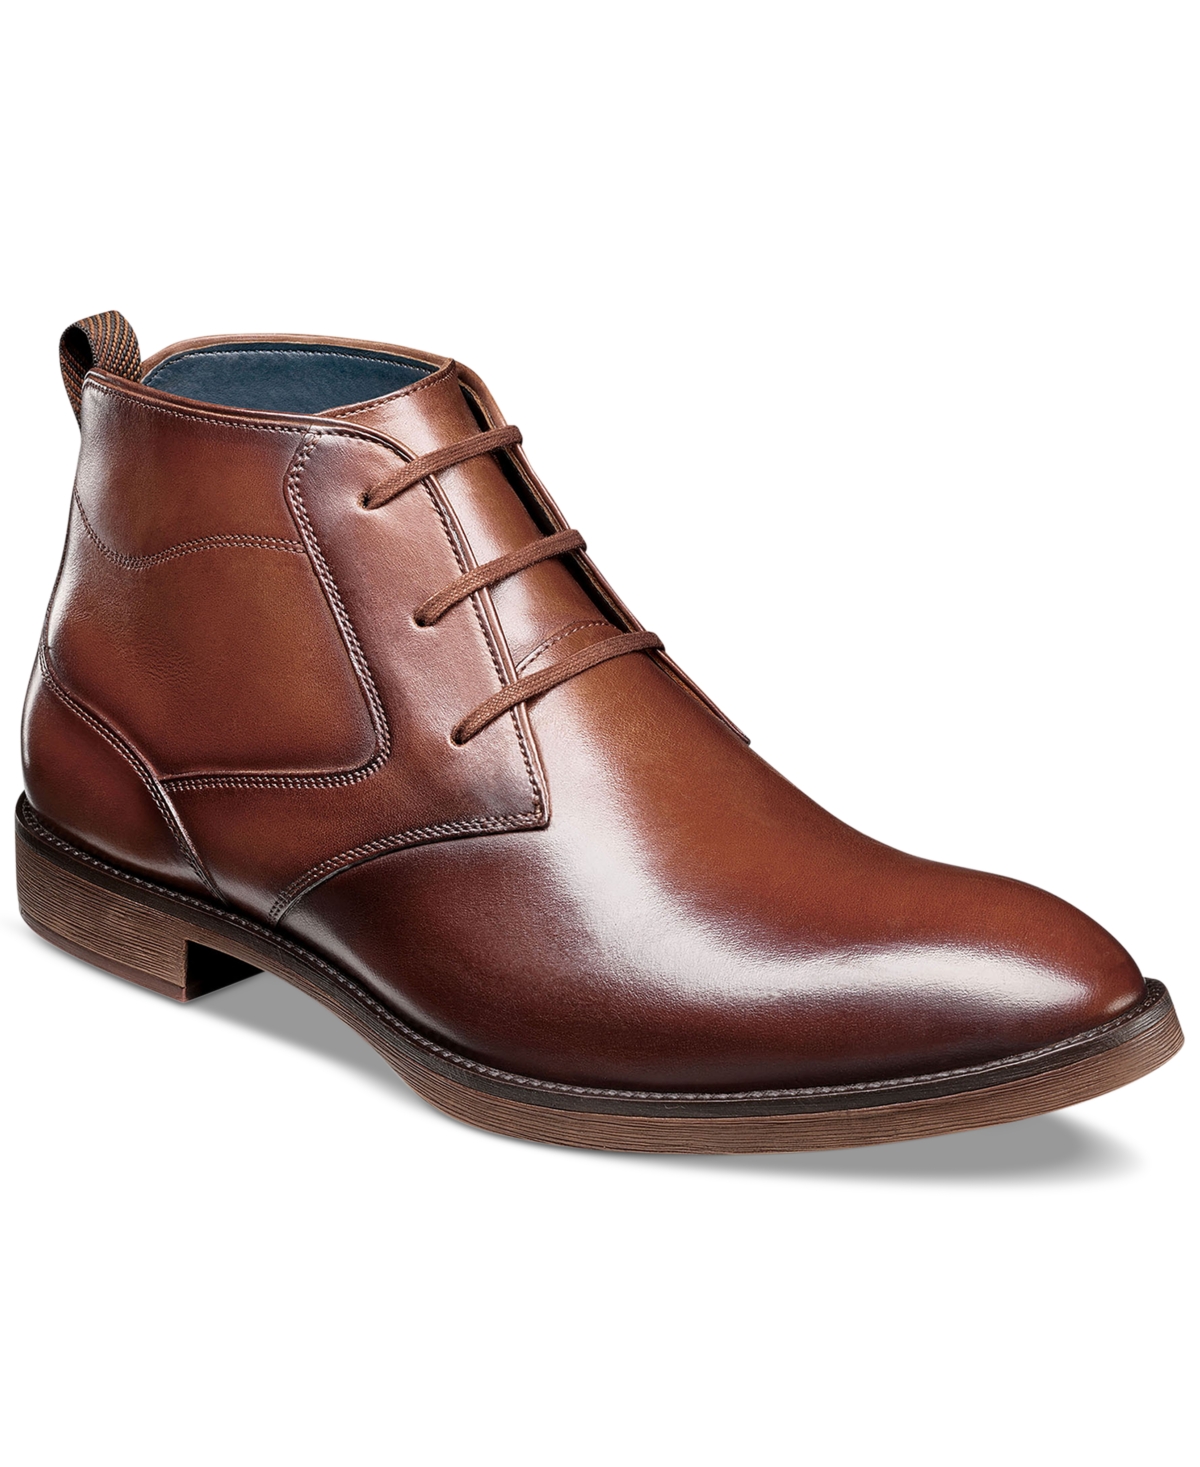 Men's Kyron Plain Toe Lace Up Chukka Boots - Cognac Smooth